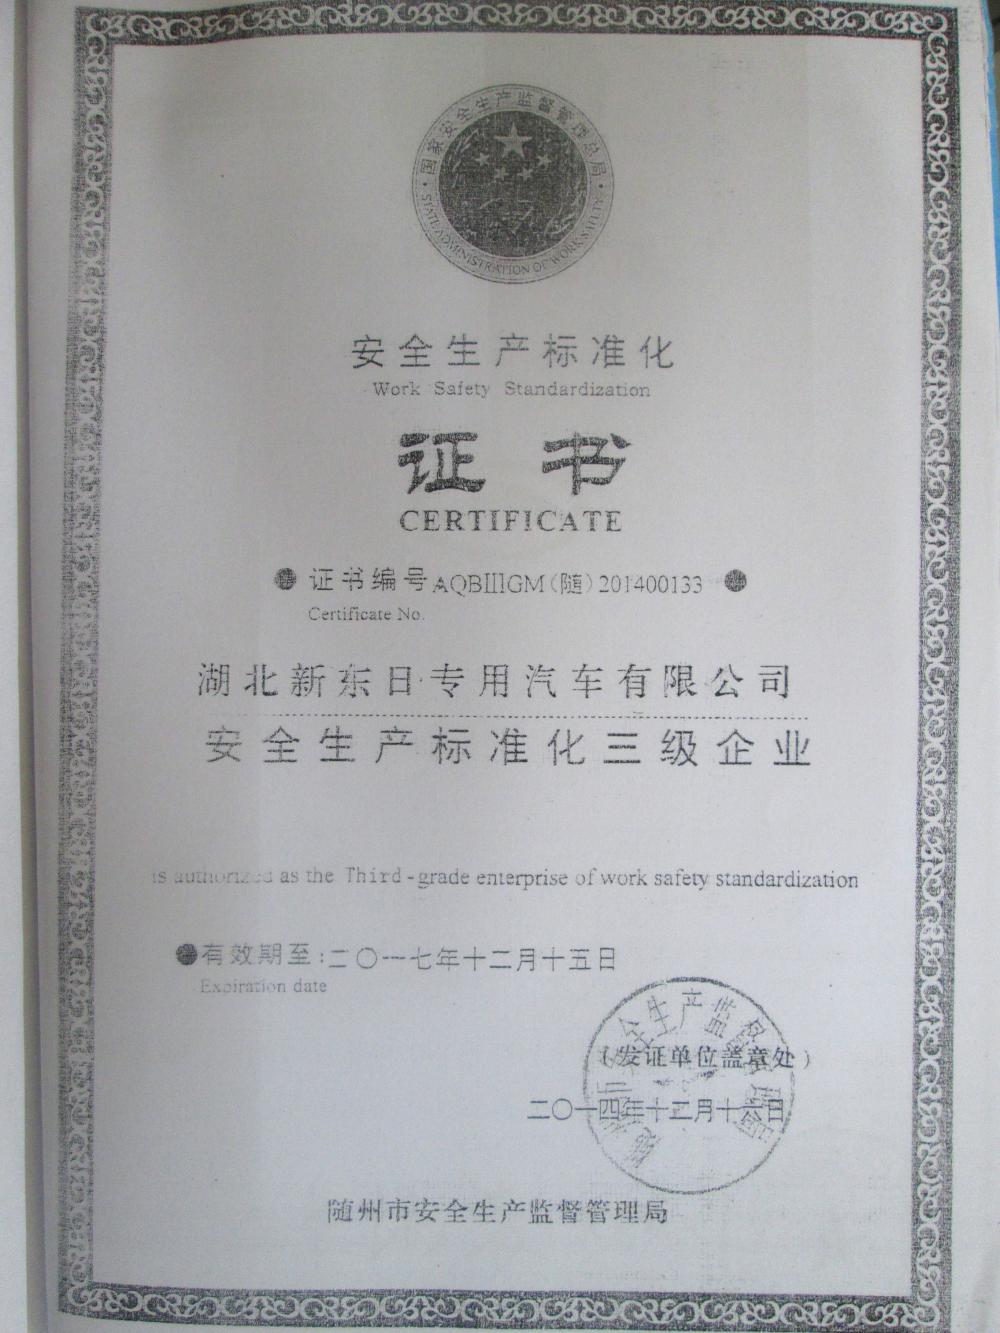 Work Safety Standardization Certificate 